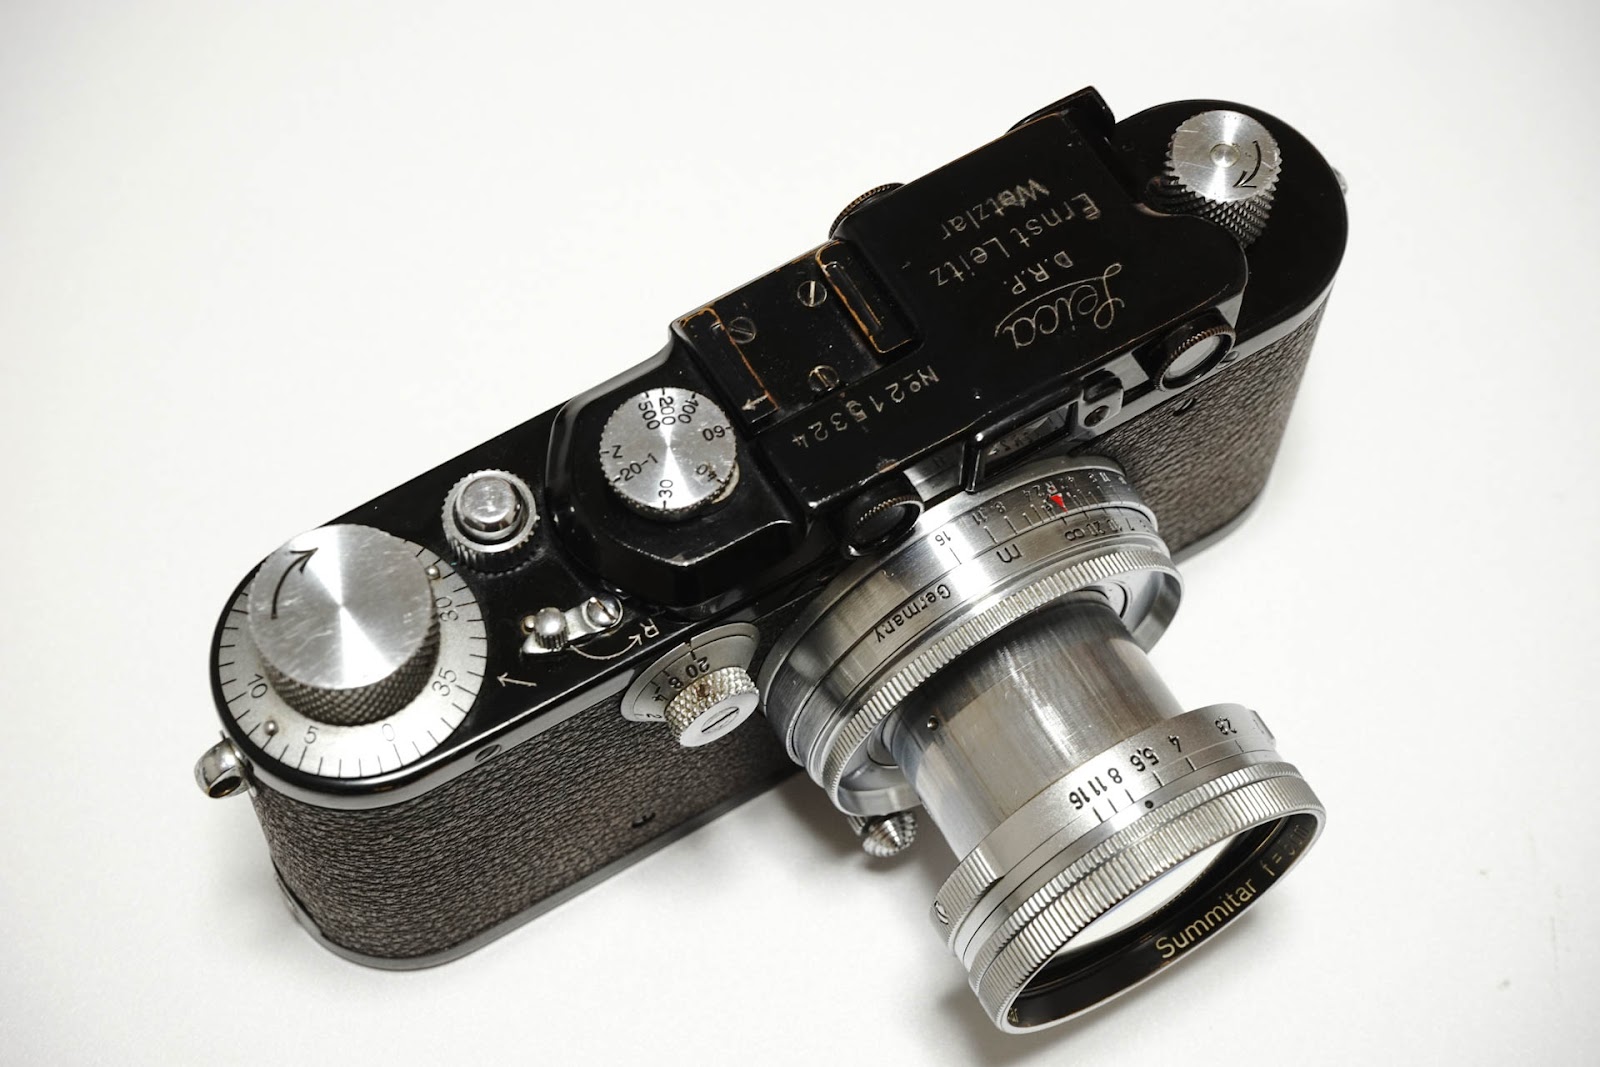 Leica バルナック ライカ IIIc ビドム付き | www.victoriartilloedm.com